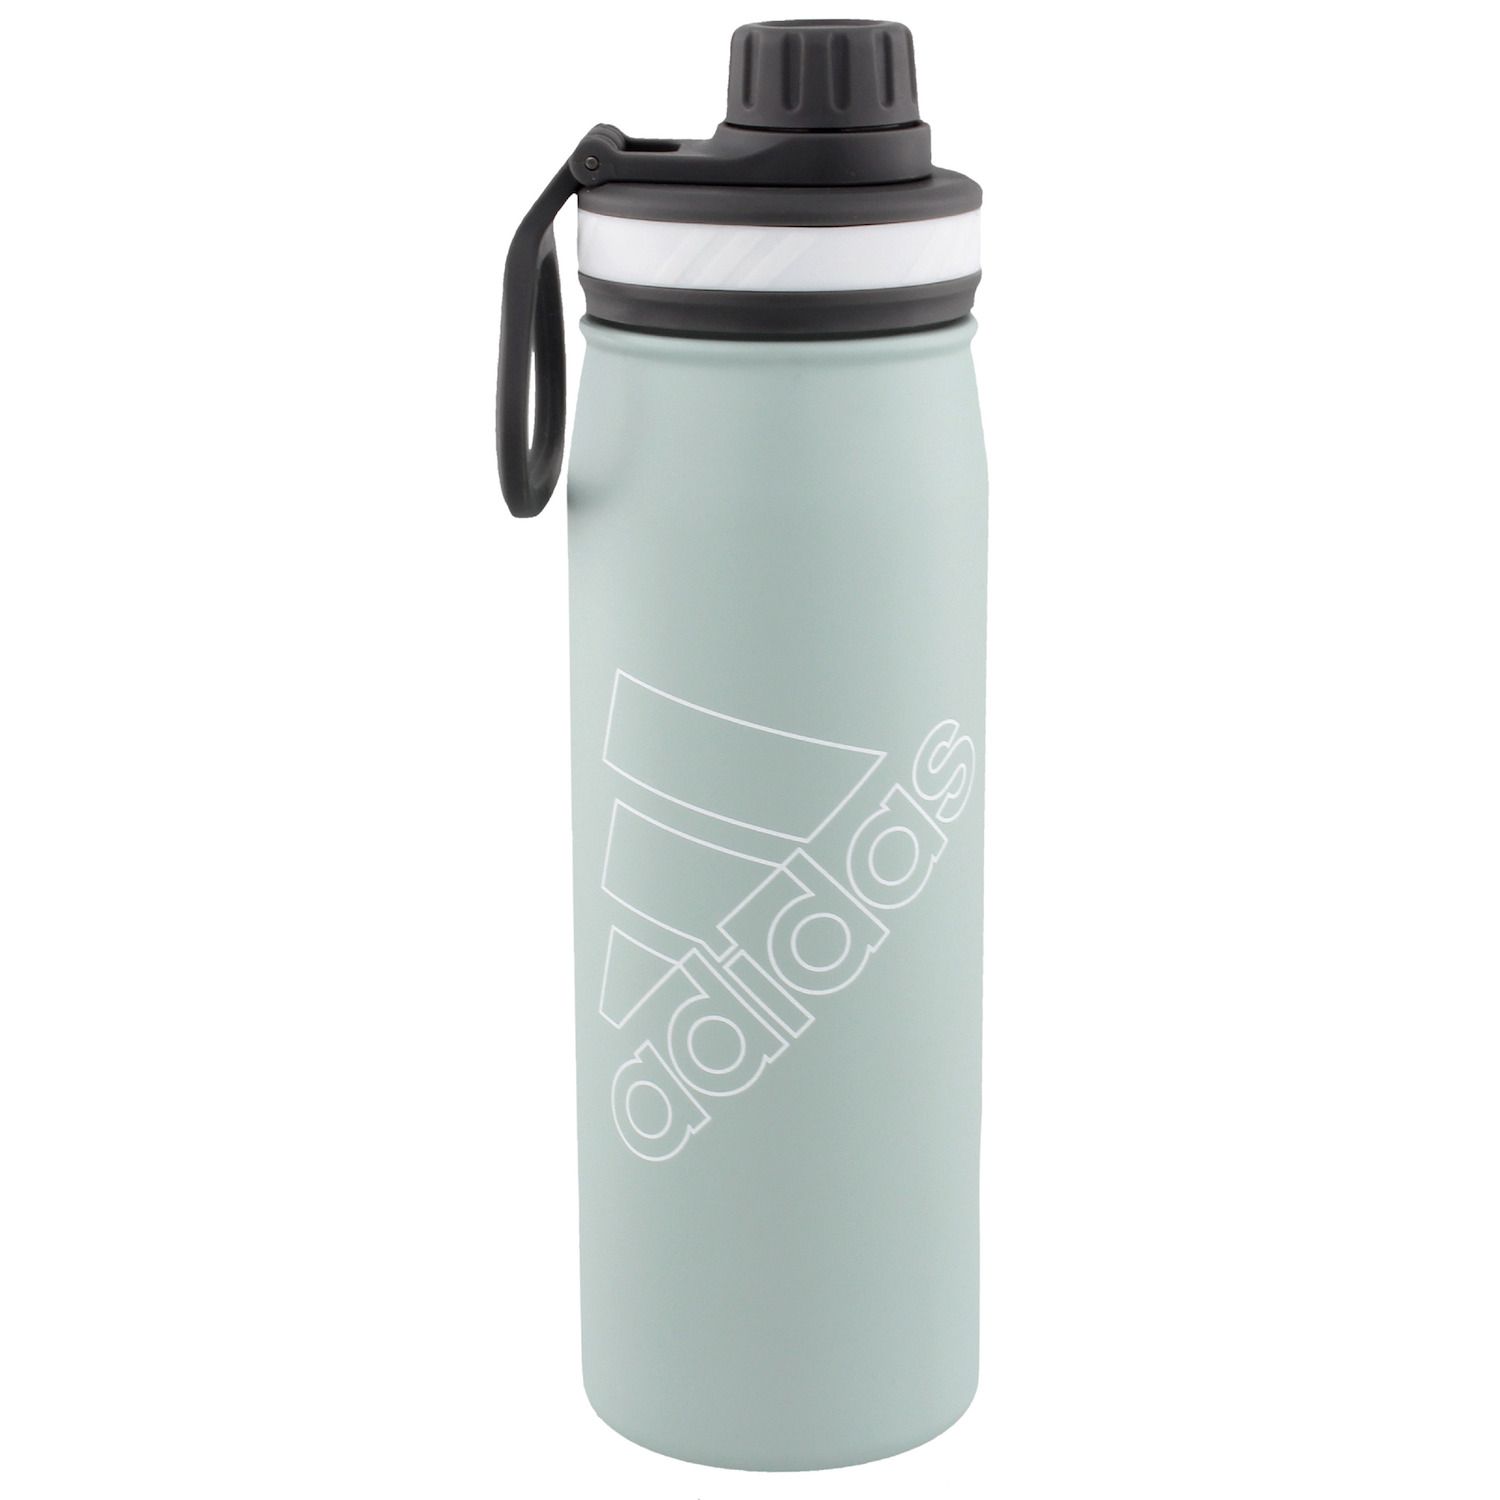 adidas water bottle